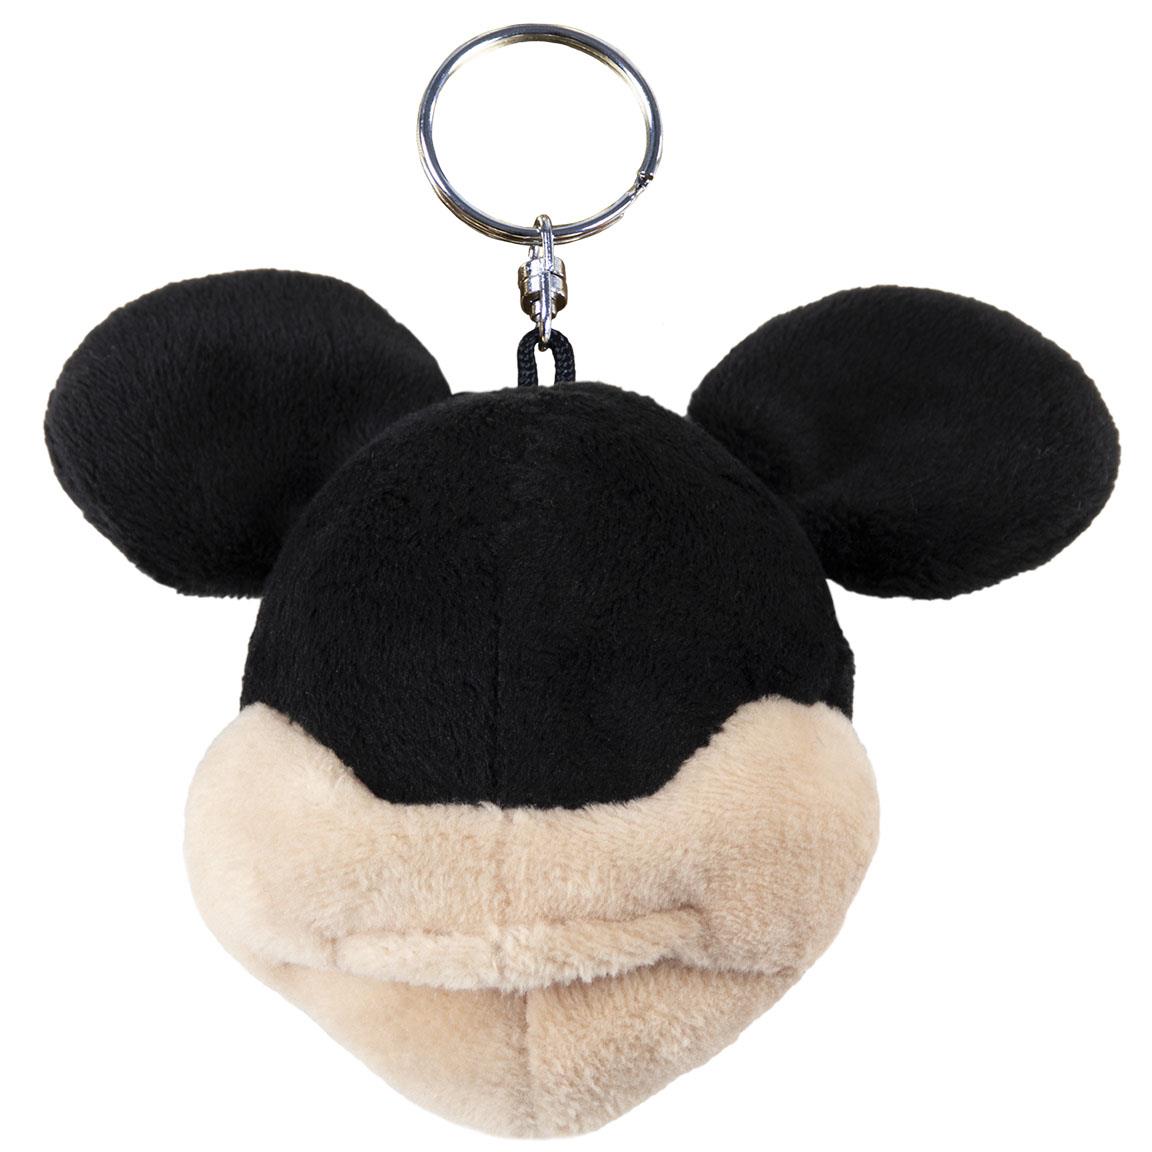 Porte-clés Peluche Mickey Mouse